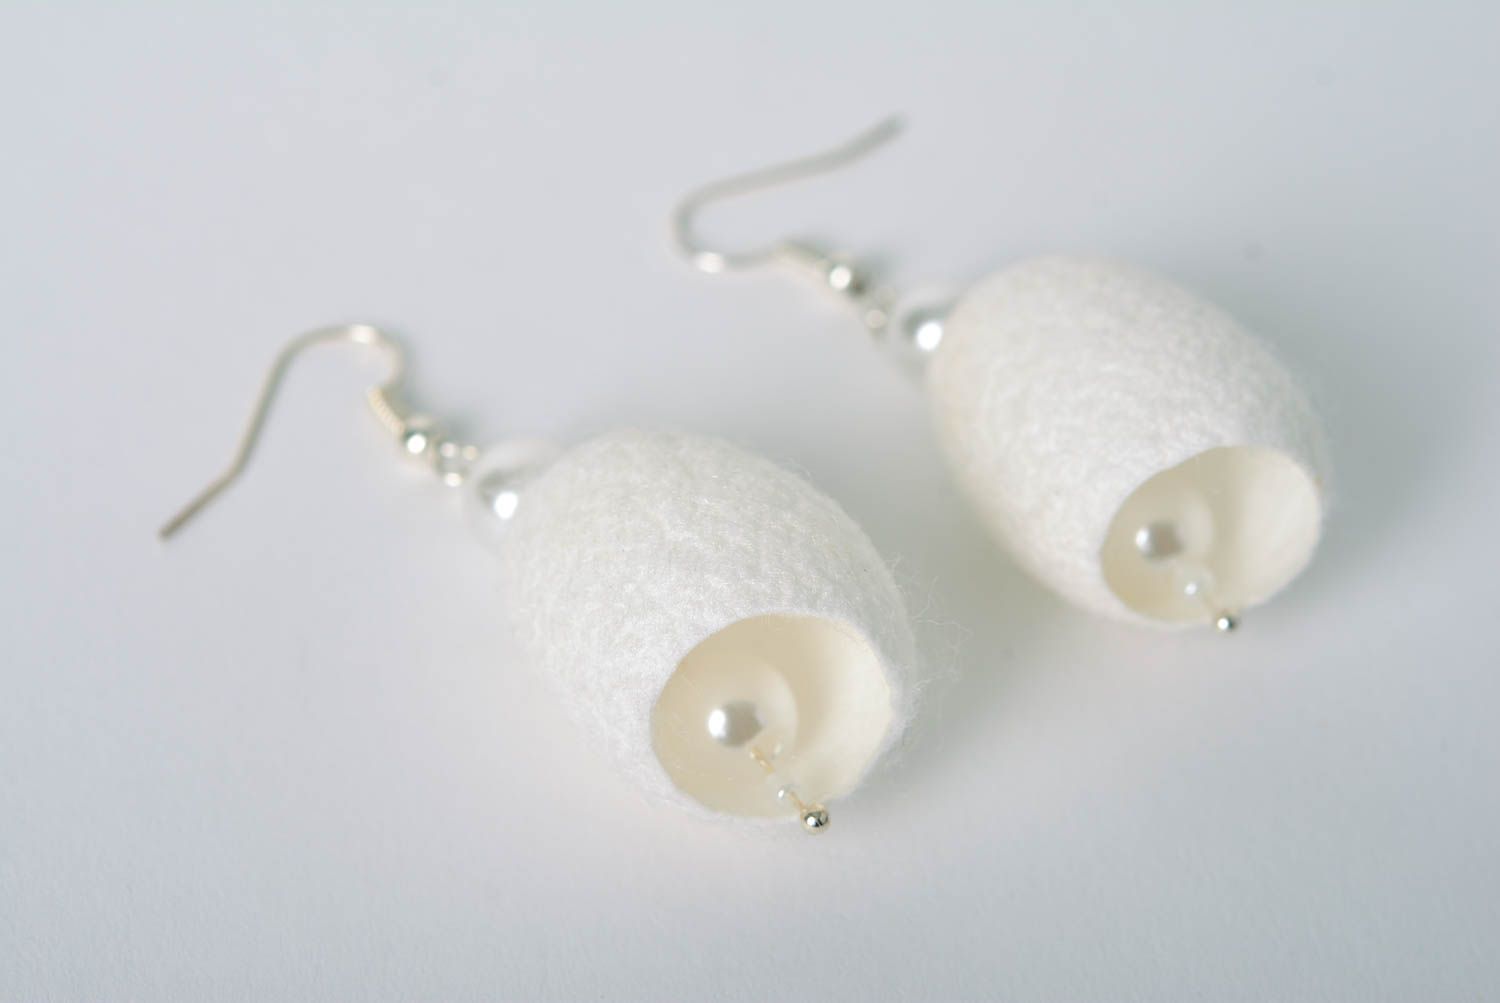 Handmade earrings designer earrings unusual gift beads accessory gift ideas photo 1